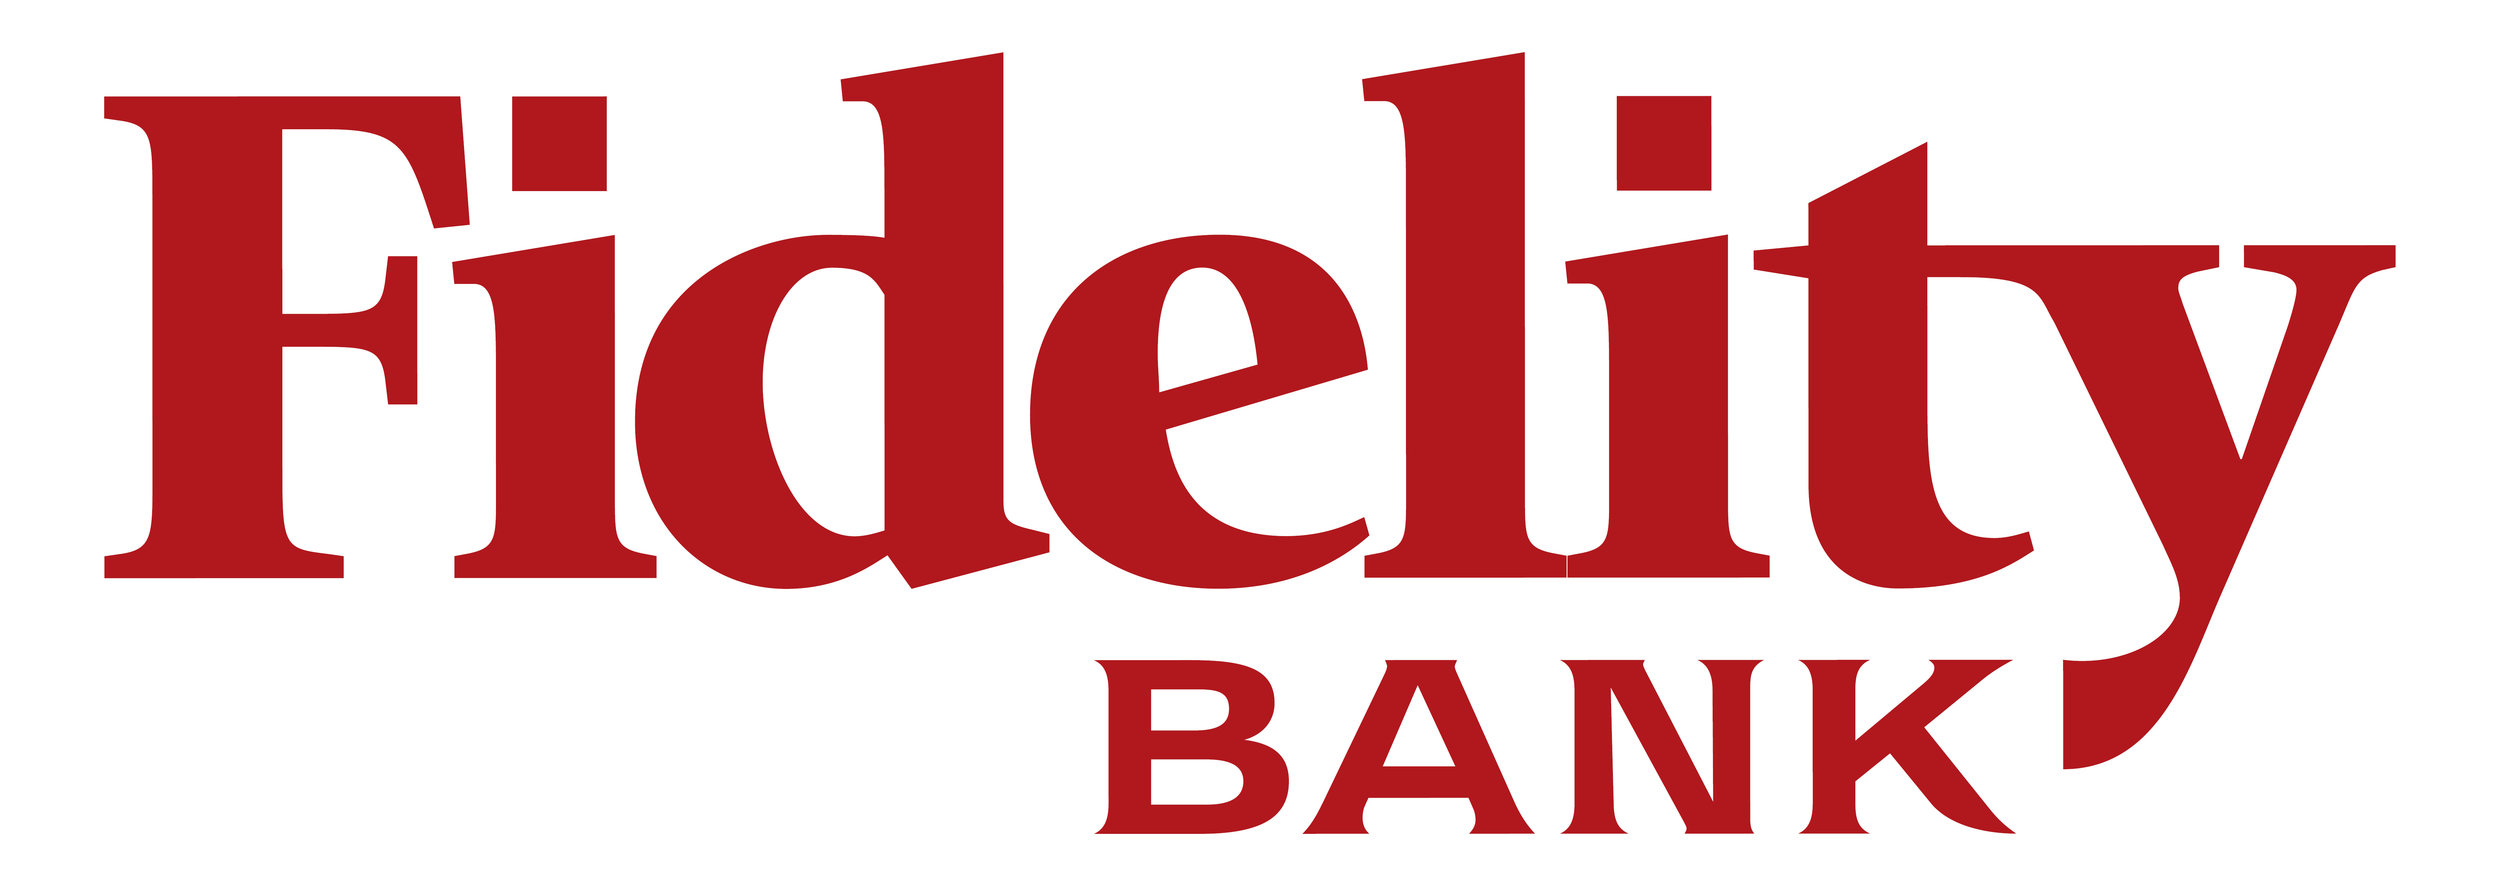 Fidelity Bank Logo - Web.jpg